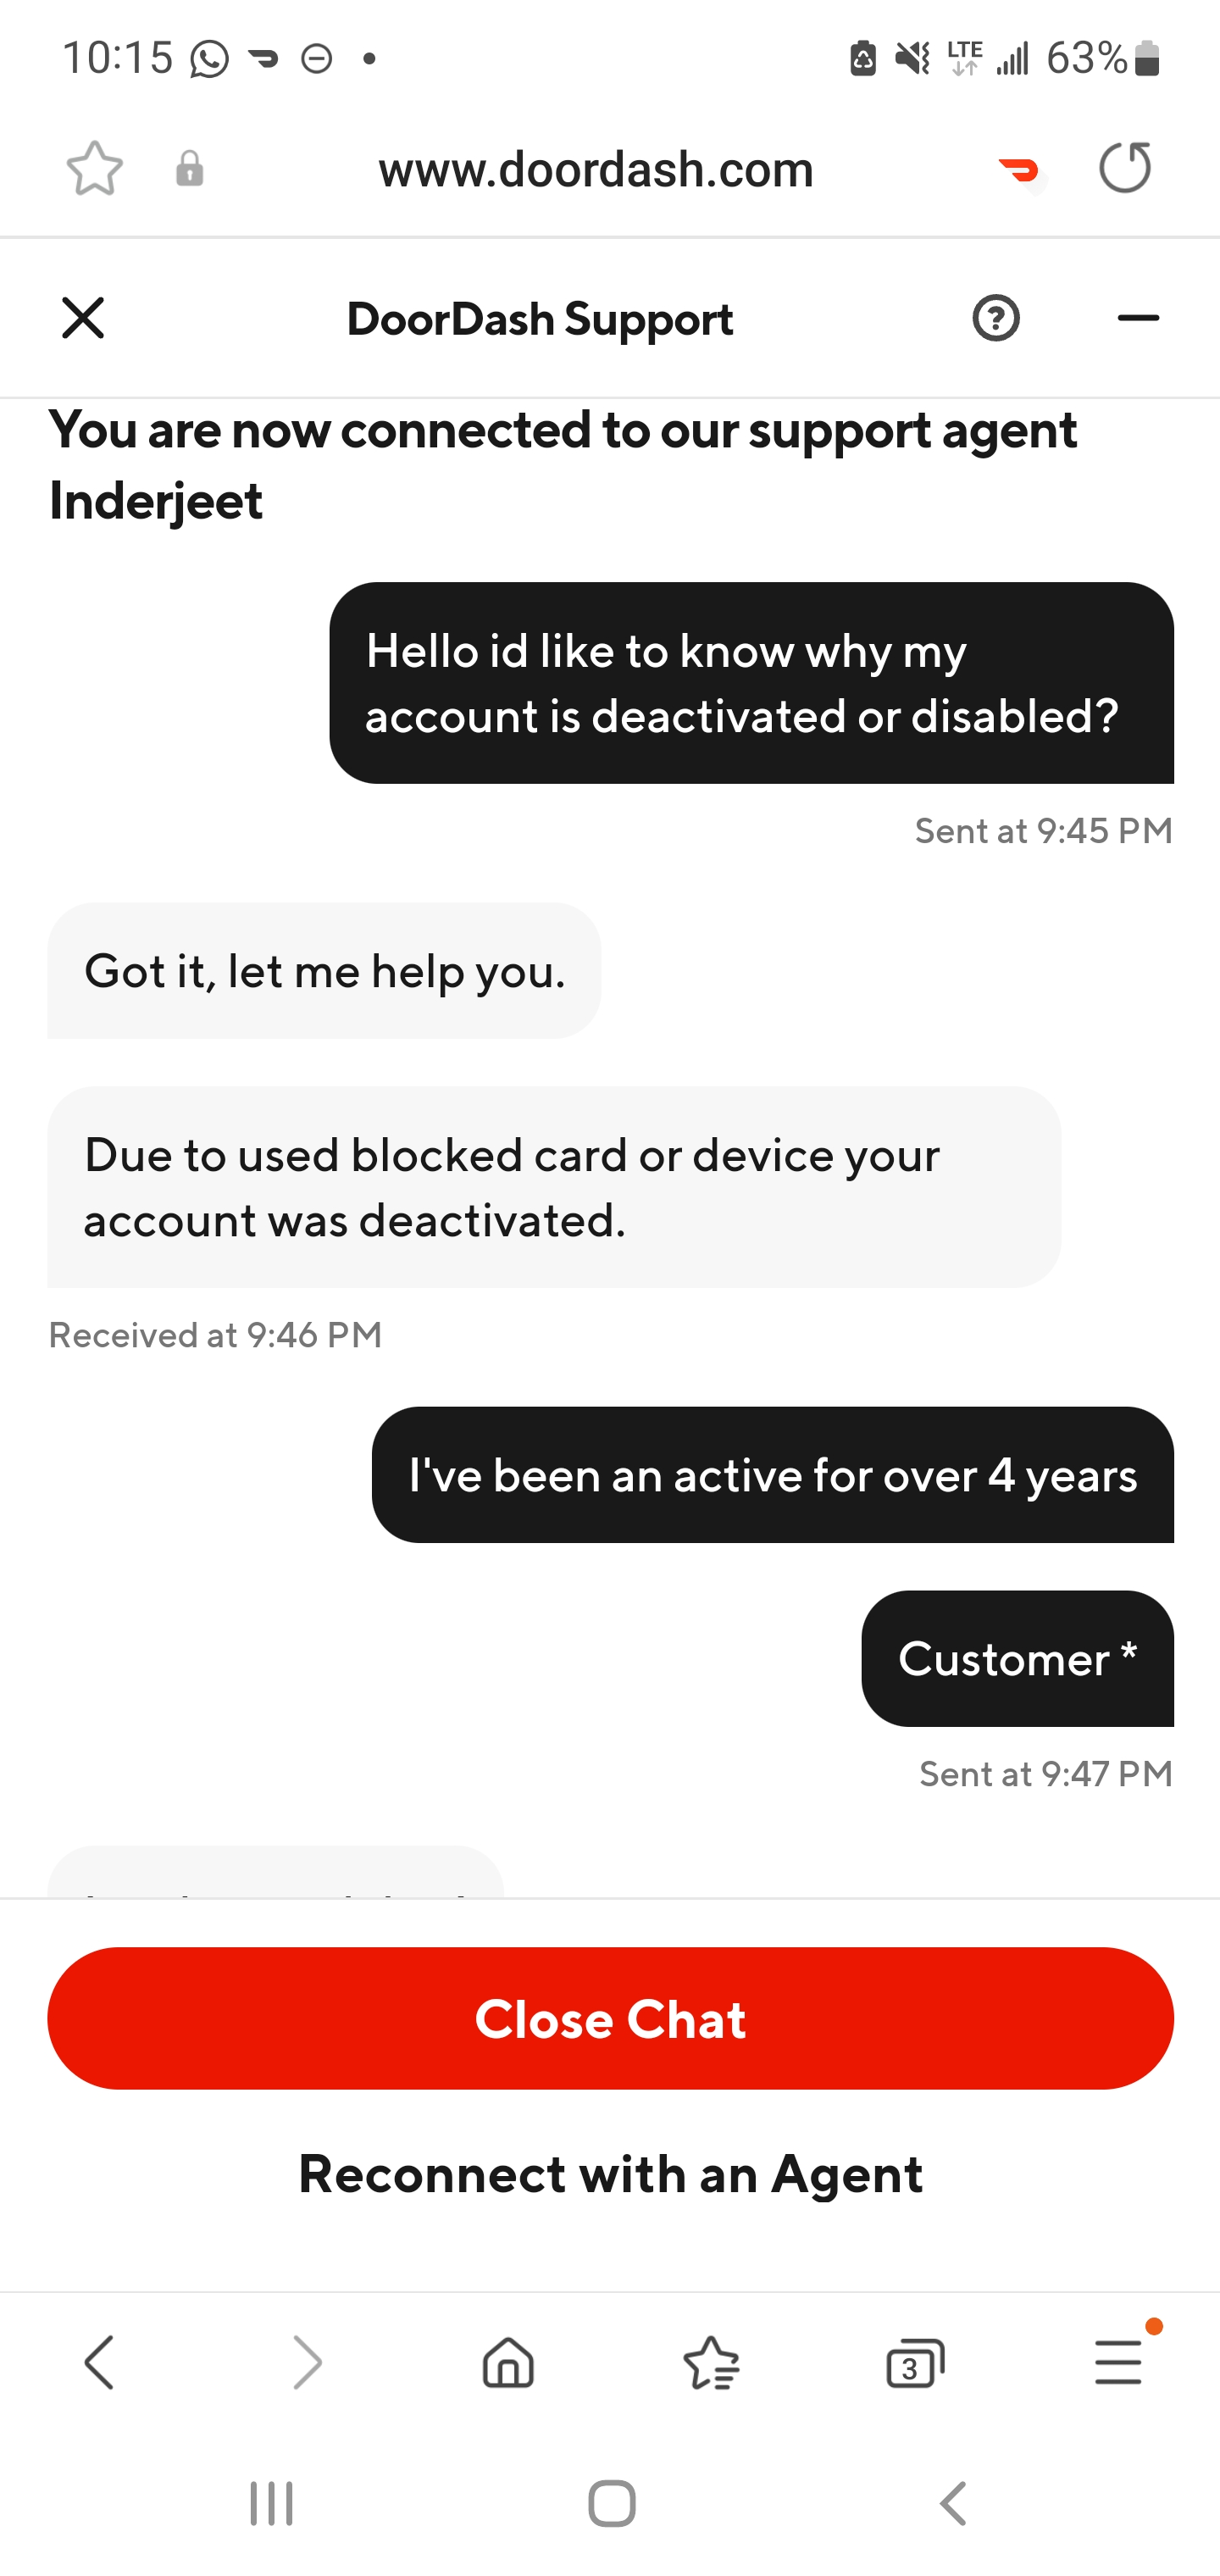 How to Contact DoorDash Customer Service